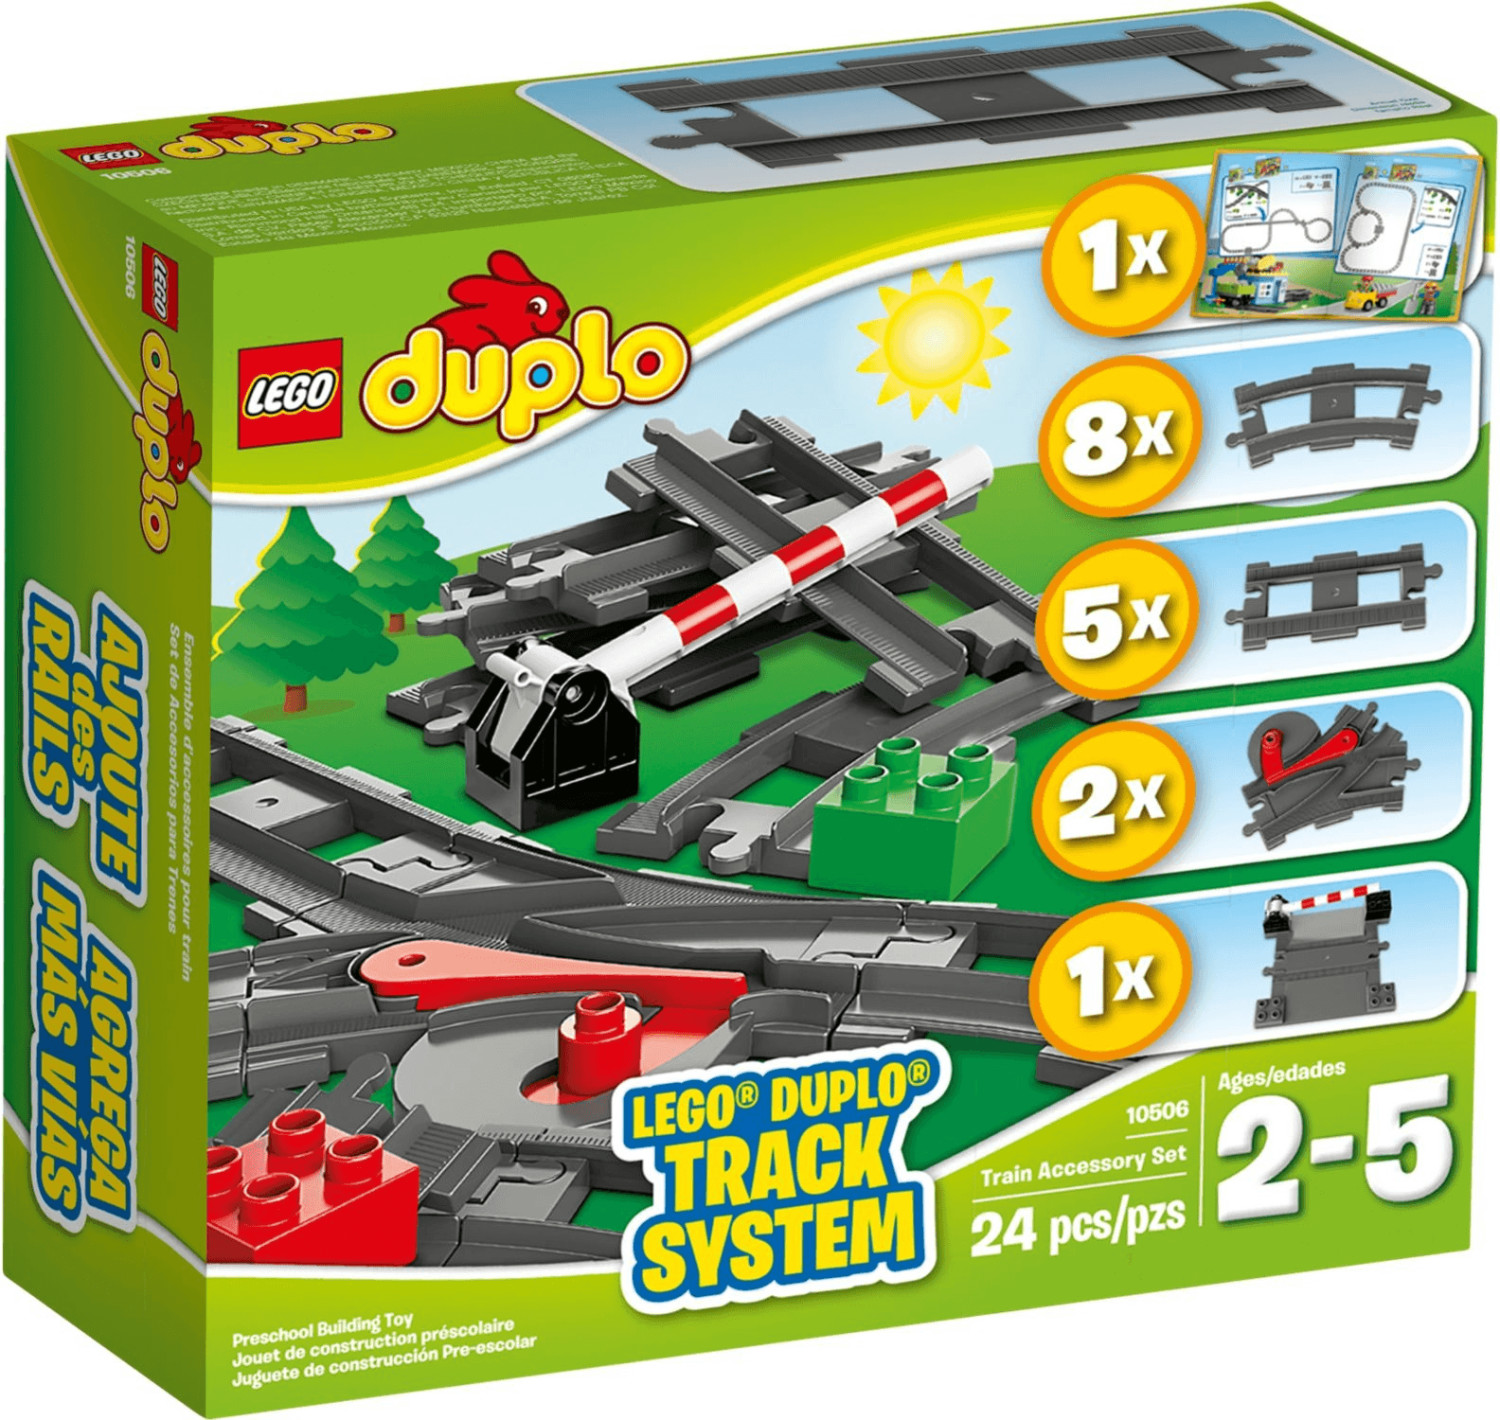 LEGO Duplo Train Accessory Set (10506)